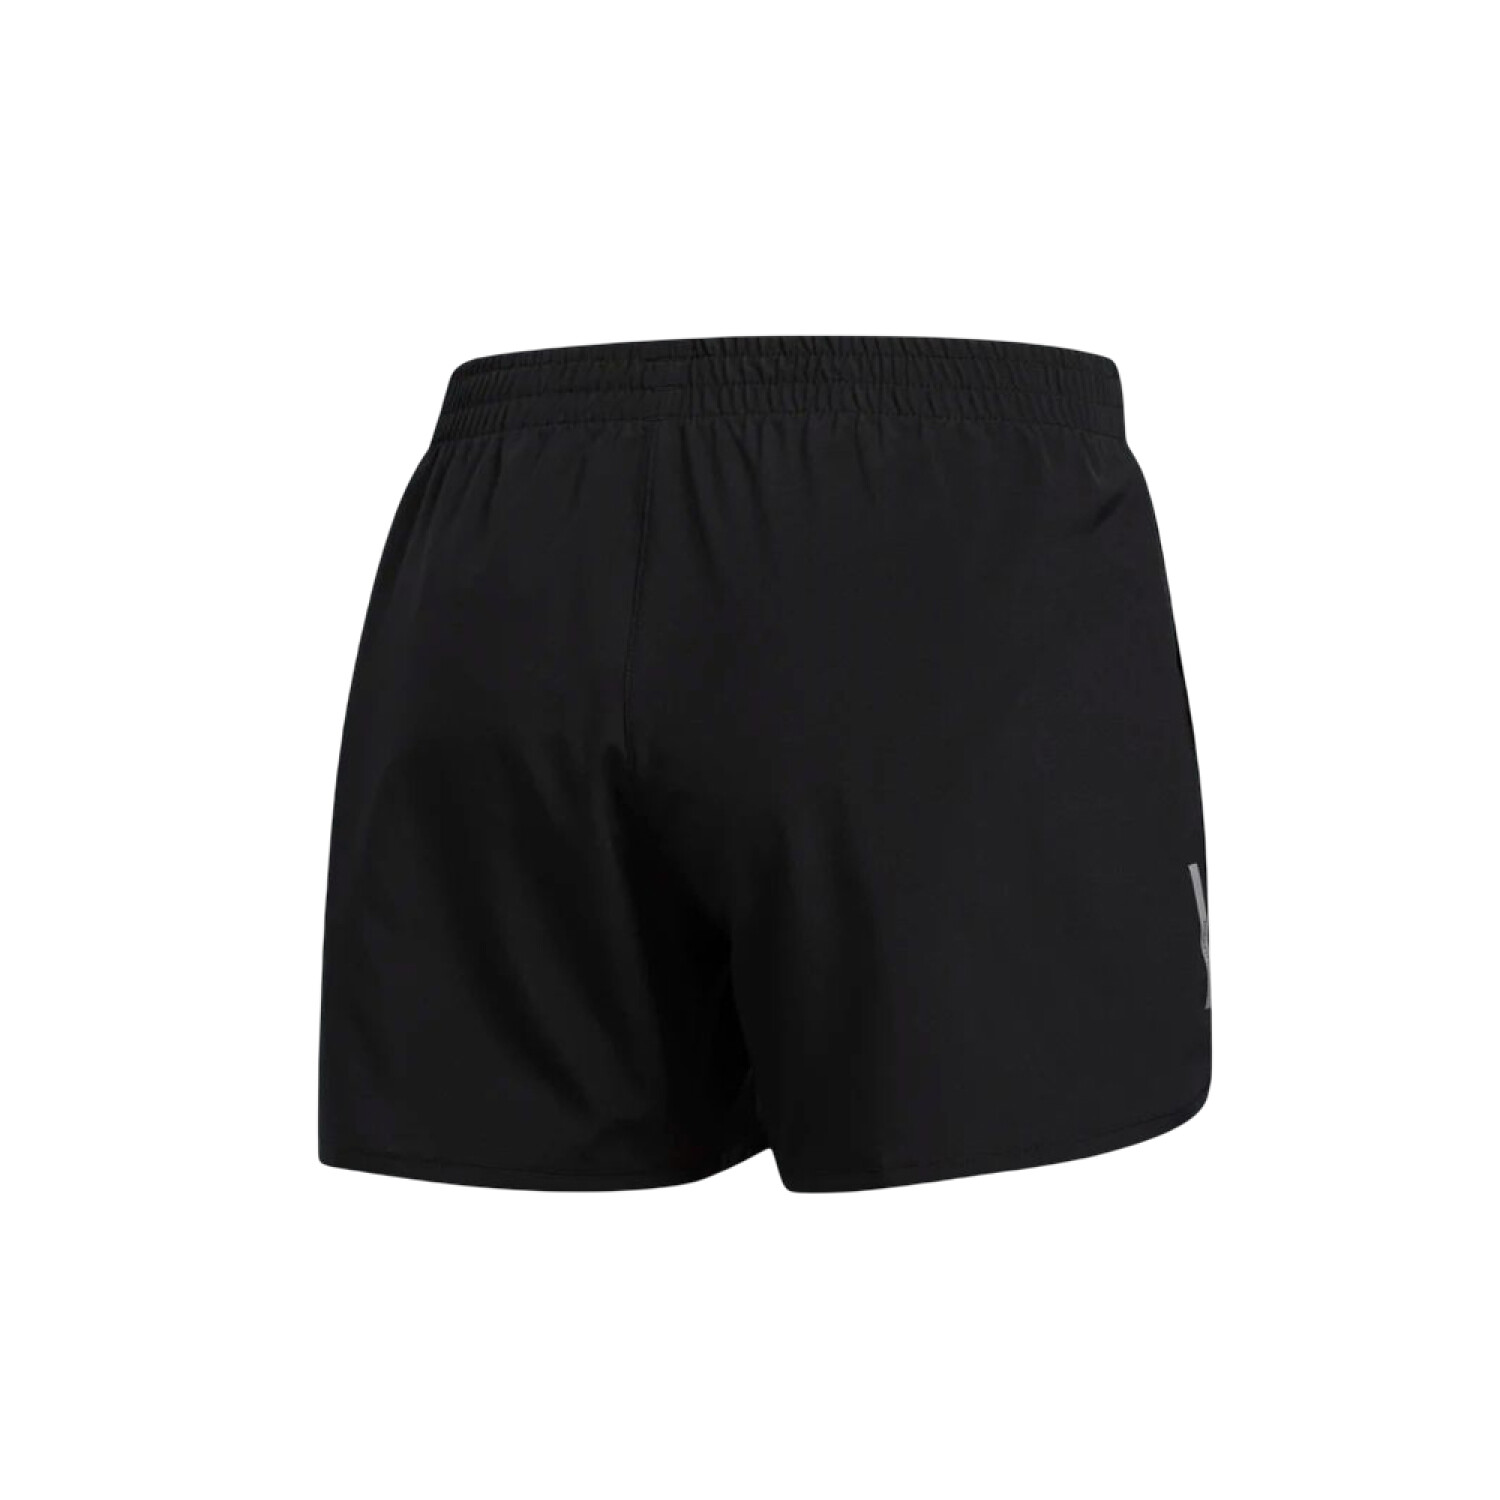 Nike Performance DRY FIT SHORT - Pantalón corto de deporte -  white/black/blanco 